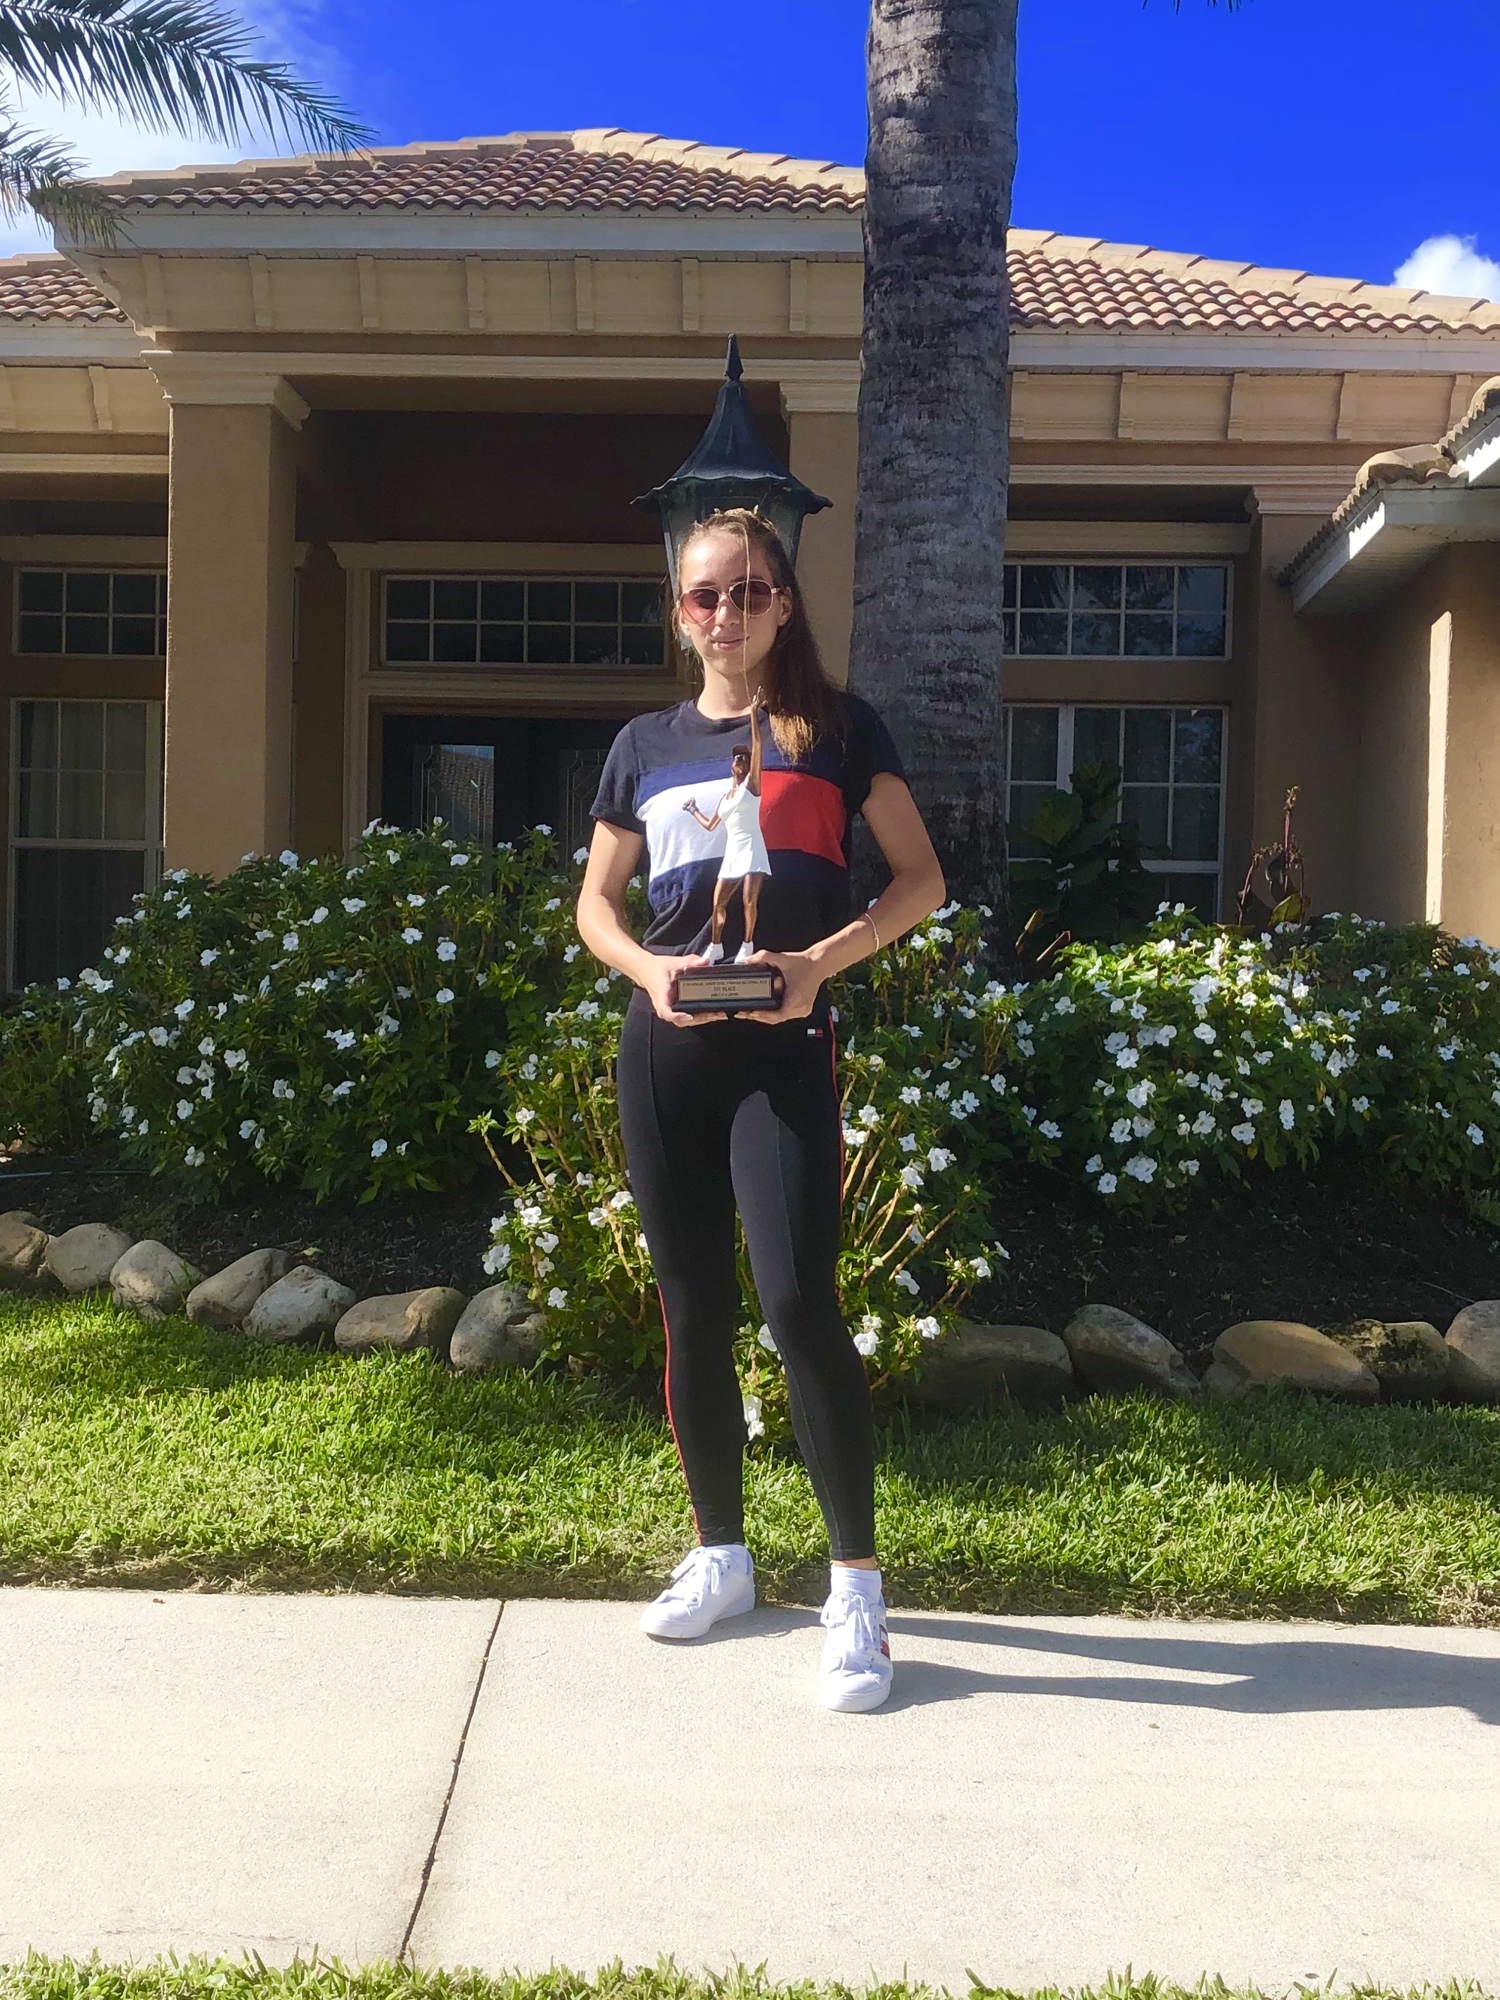 Sarasota's Nikki Yanez, here posing with her USTA Florida Level 3 Singles trophy, has won nine of her last 10 tournaments. Photo courtesy Paul Yanez.